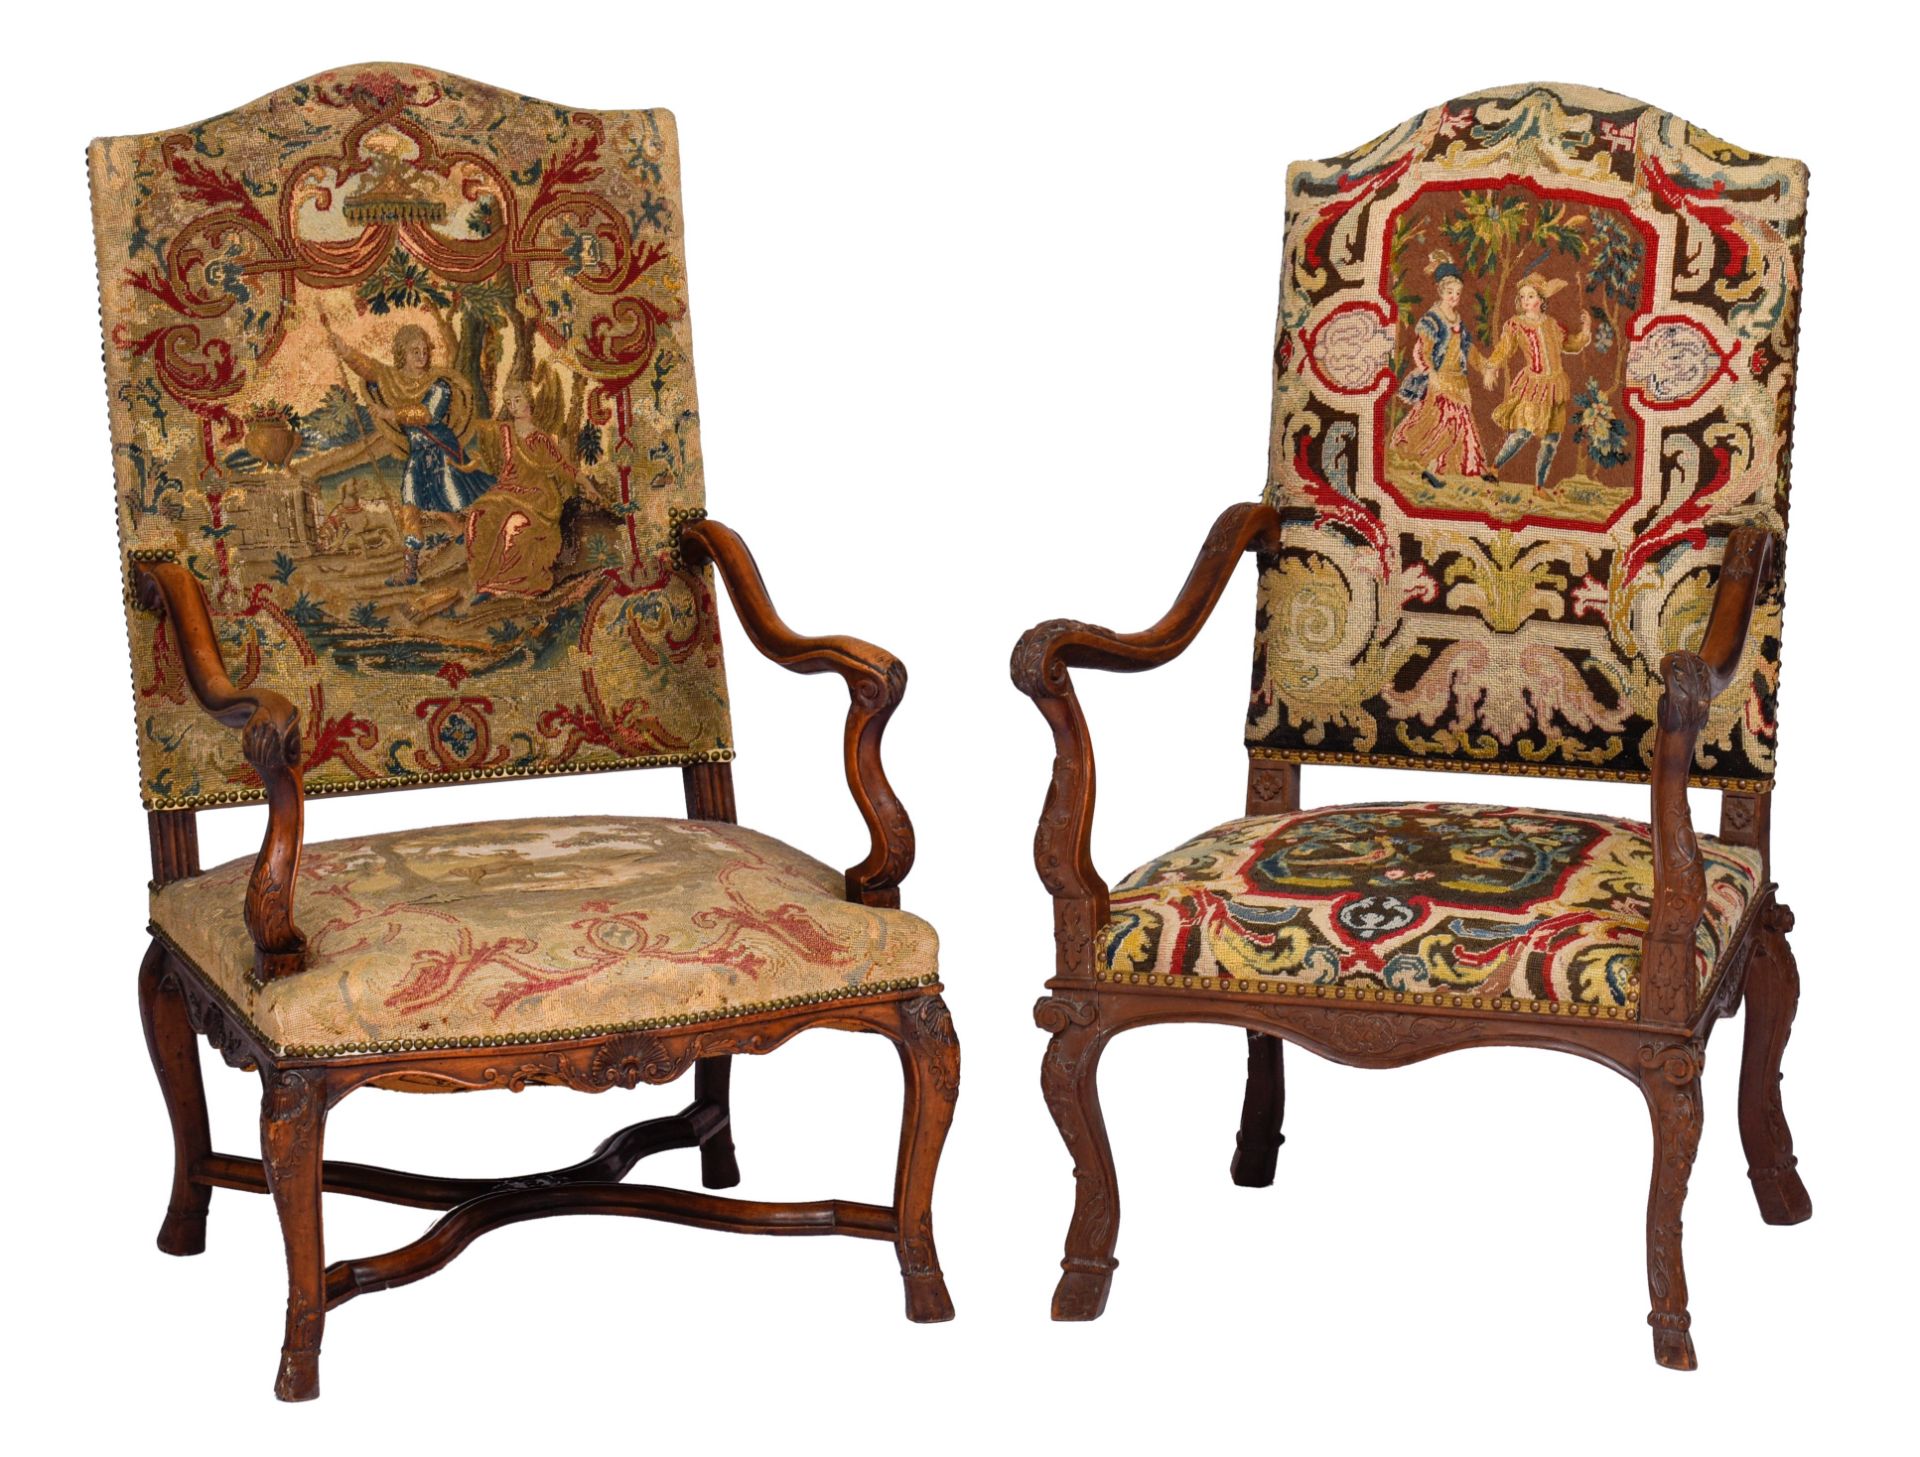 Two carved walnut Régence armchairs, H 120 - W 71 - H 116 - W 70 cm